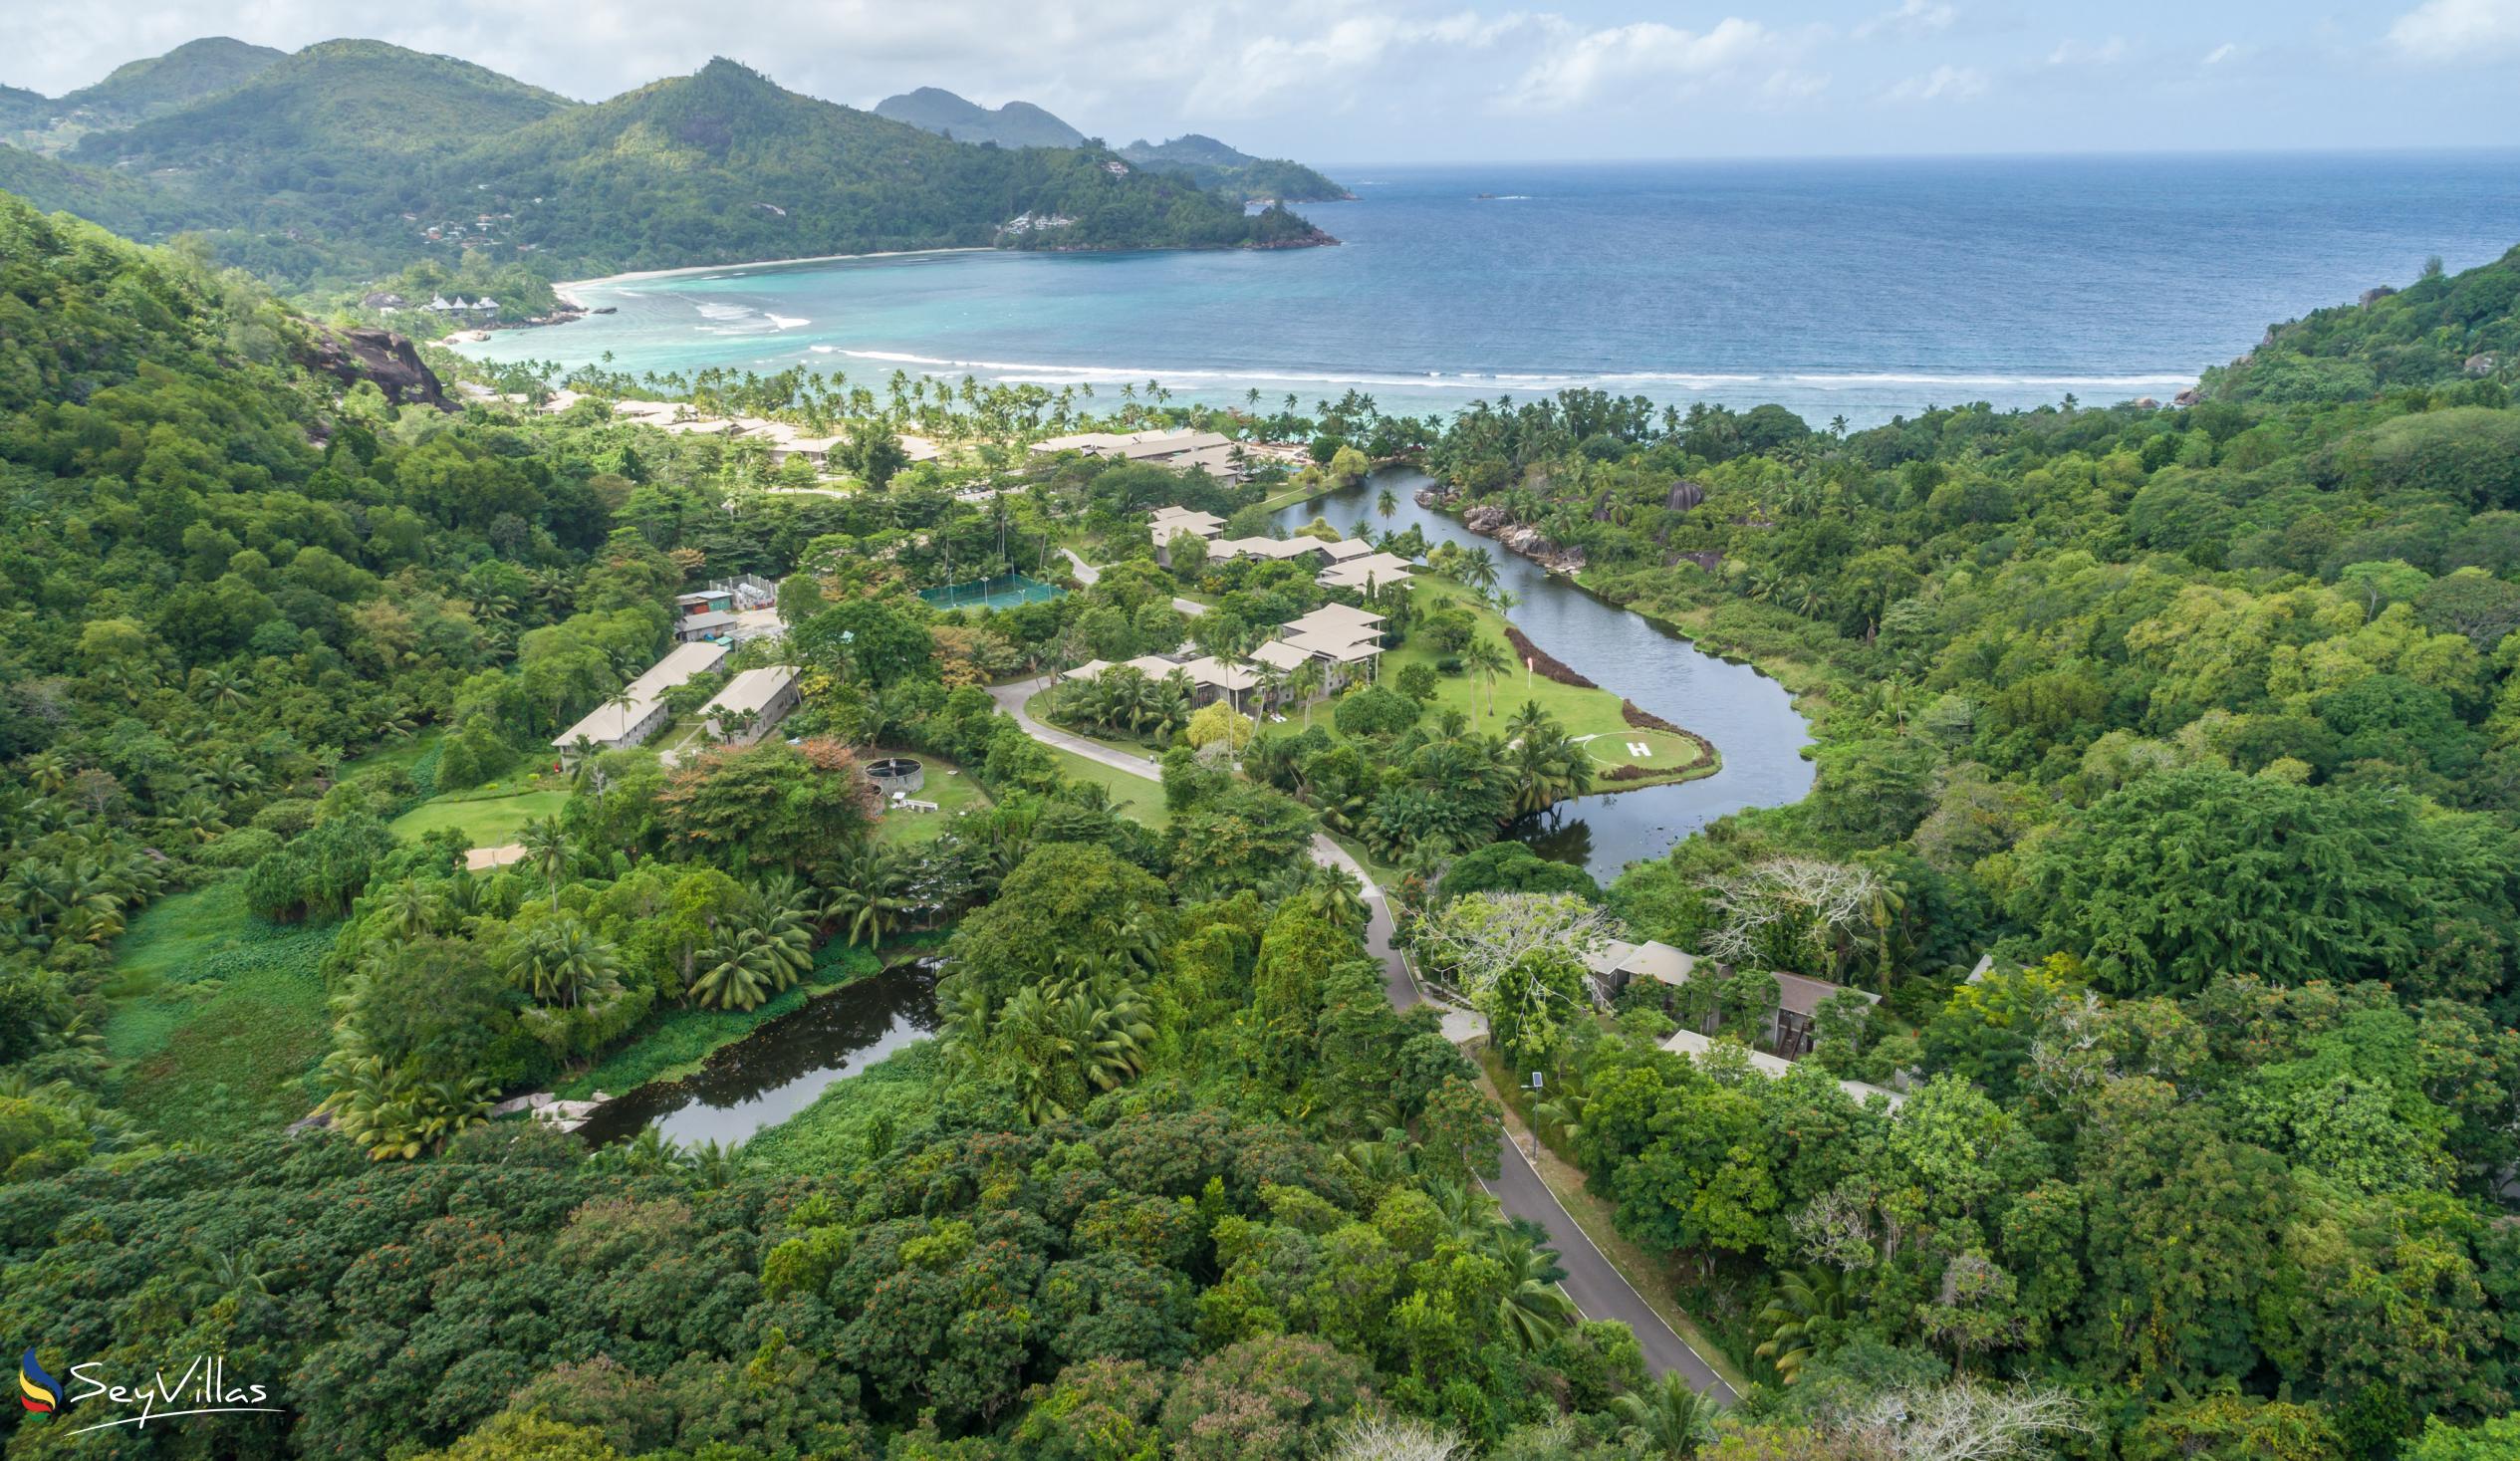 Foto 86: Kempinski Seychelles Resort Baie Lazare - Lage - Mahé (Seychellen)